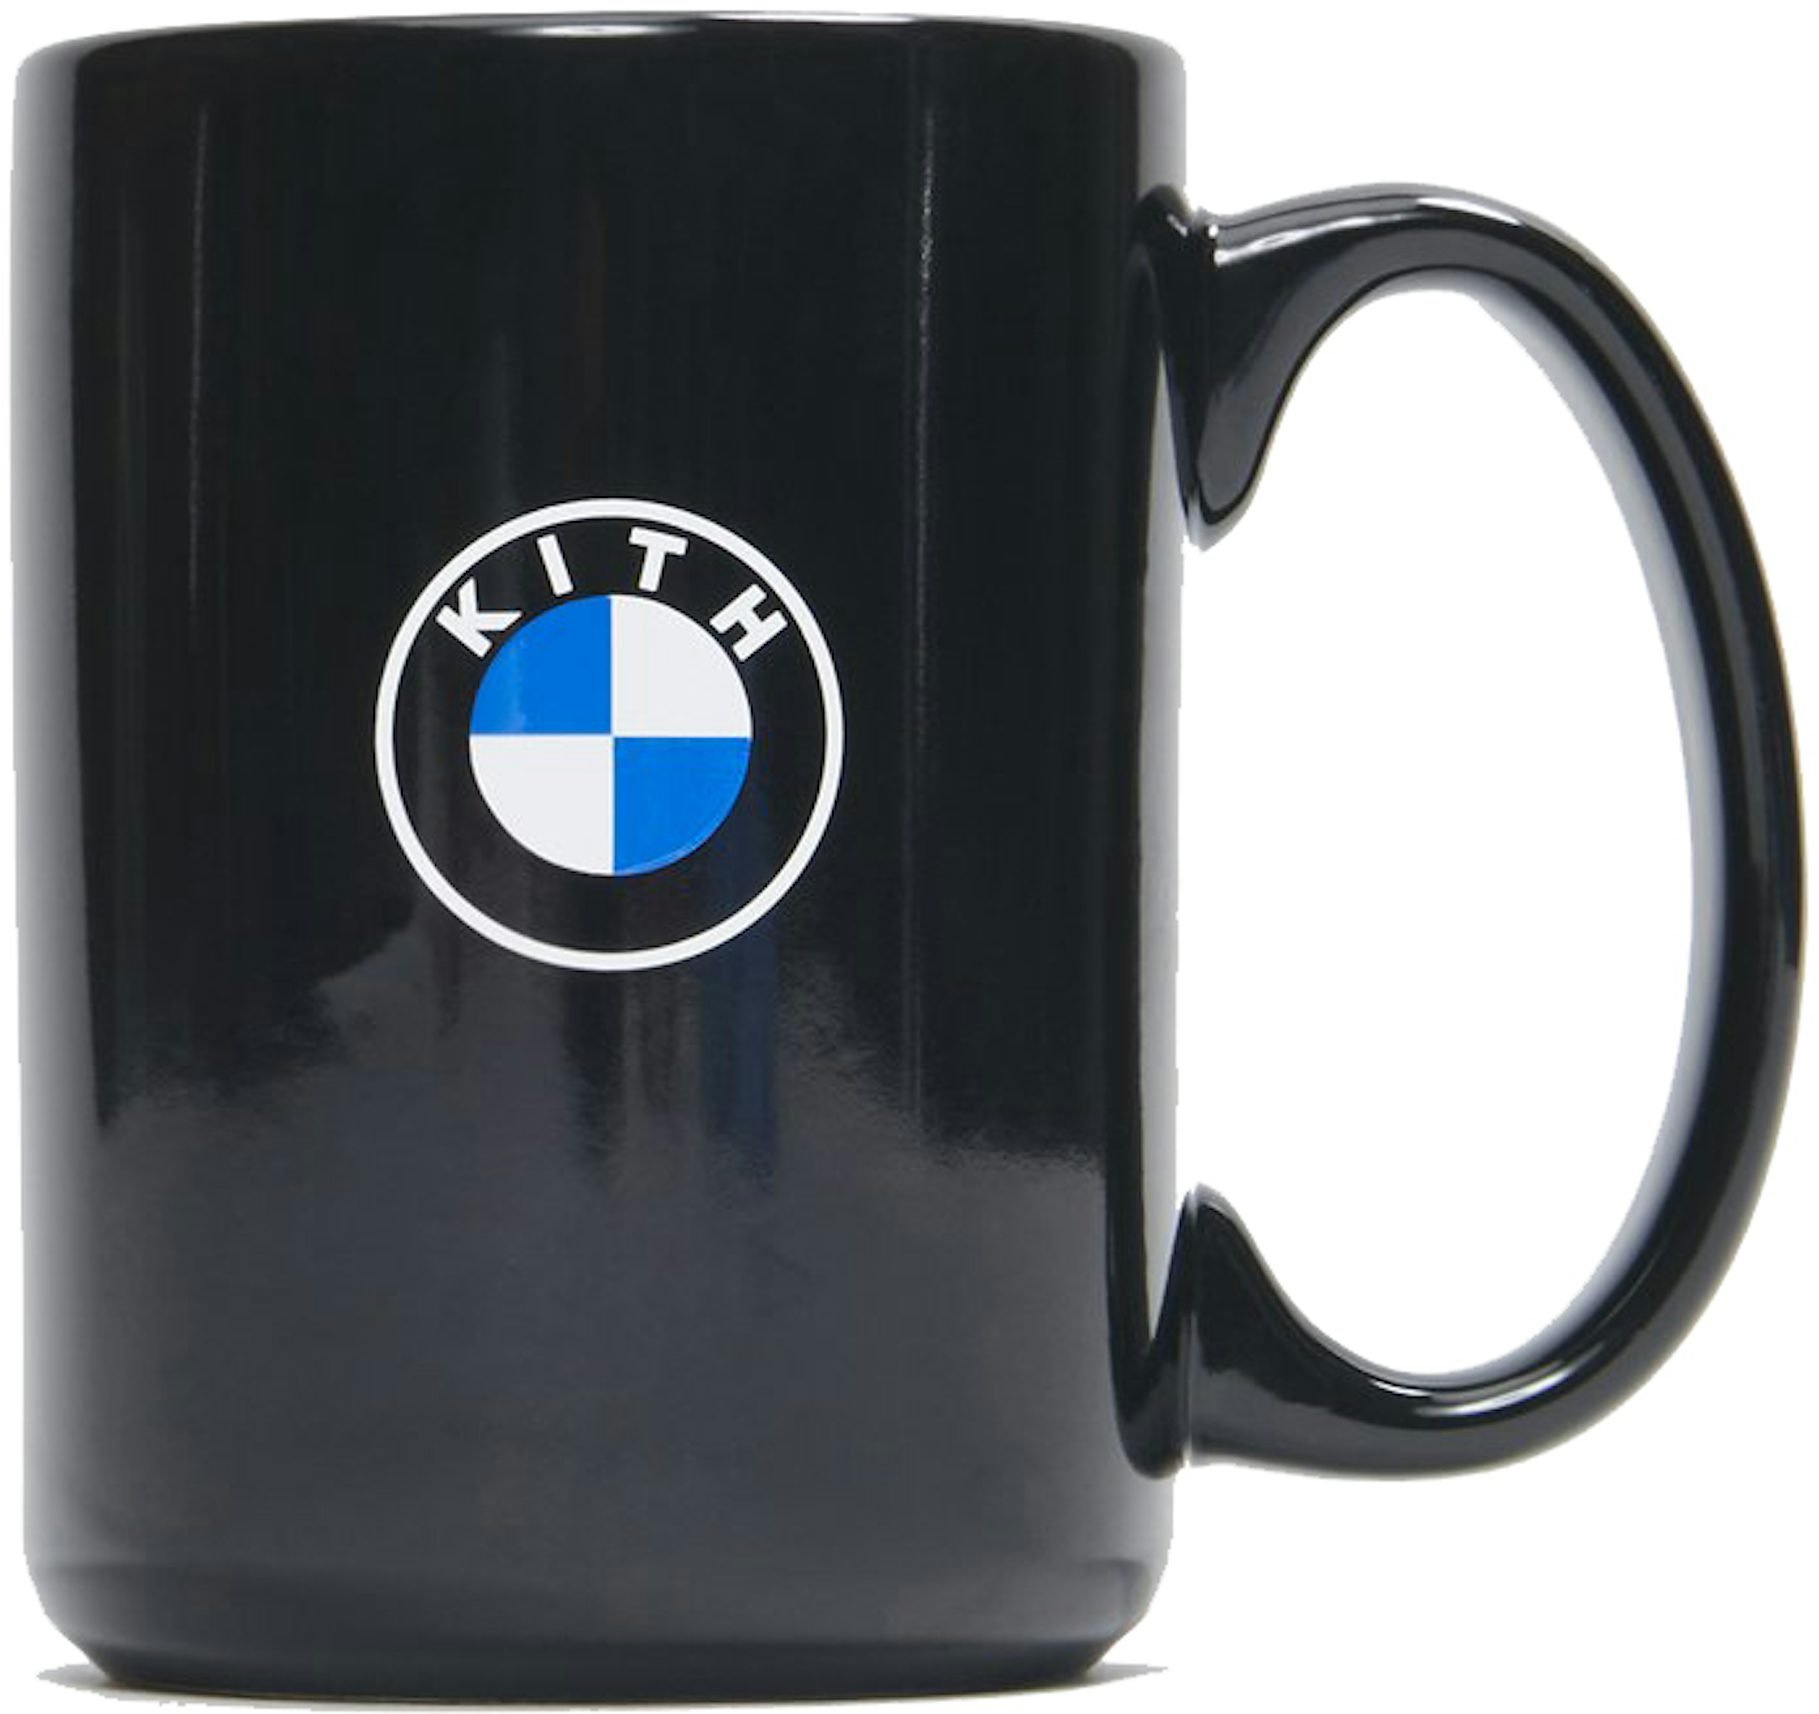 https://images.stockx.com/images/Kith-x-BMW-Roundel-Mug-Black.jpg?fit=fill&bg=FFFFFF&w=1200&h=857&fm=jpg&auto=compress&dpr=2&trim=color&updated_at=1634916533&q=60